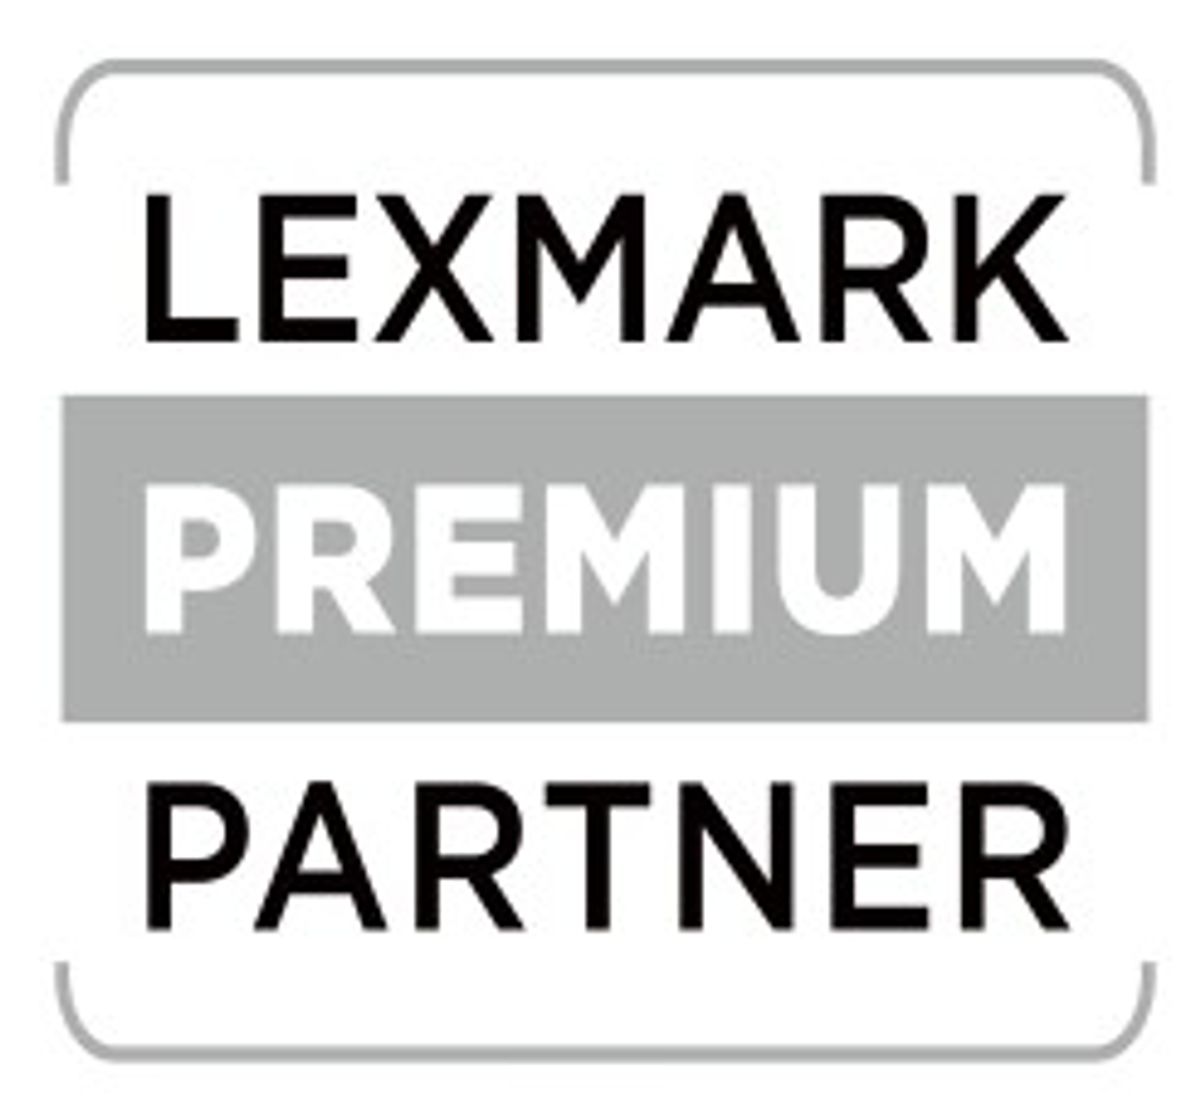 Lexmark Premium Partner